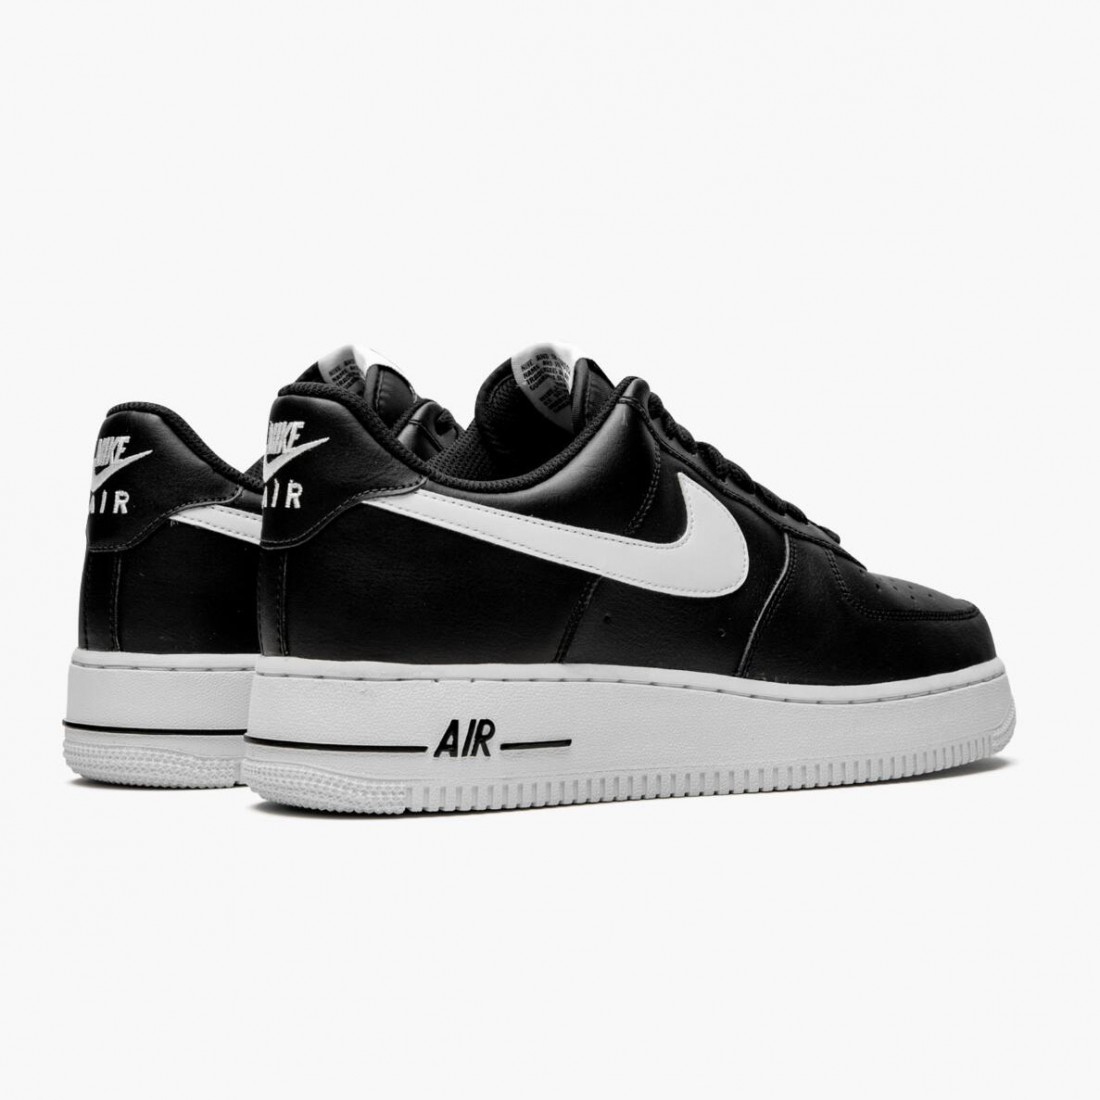 Nike Air Force 1 07 Black CJ0952 001 Unisex Casual Shoes - CJ0952 001